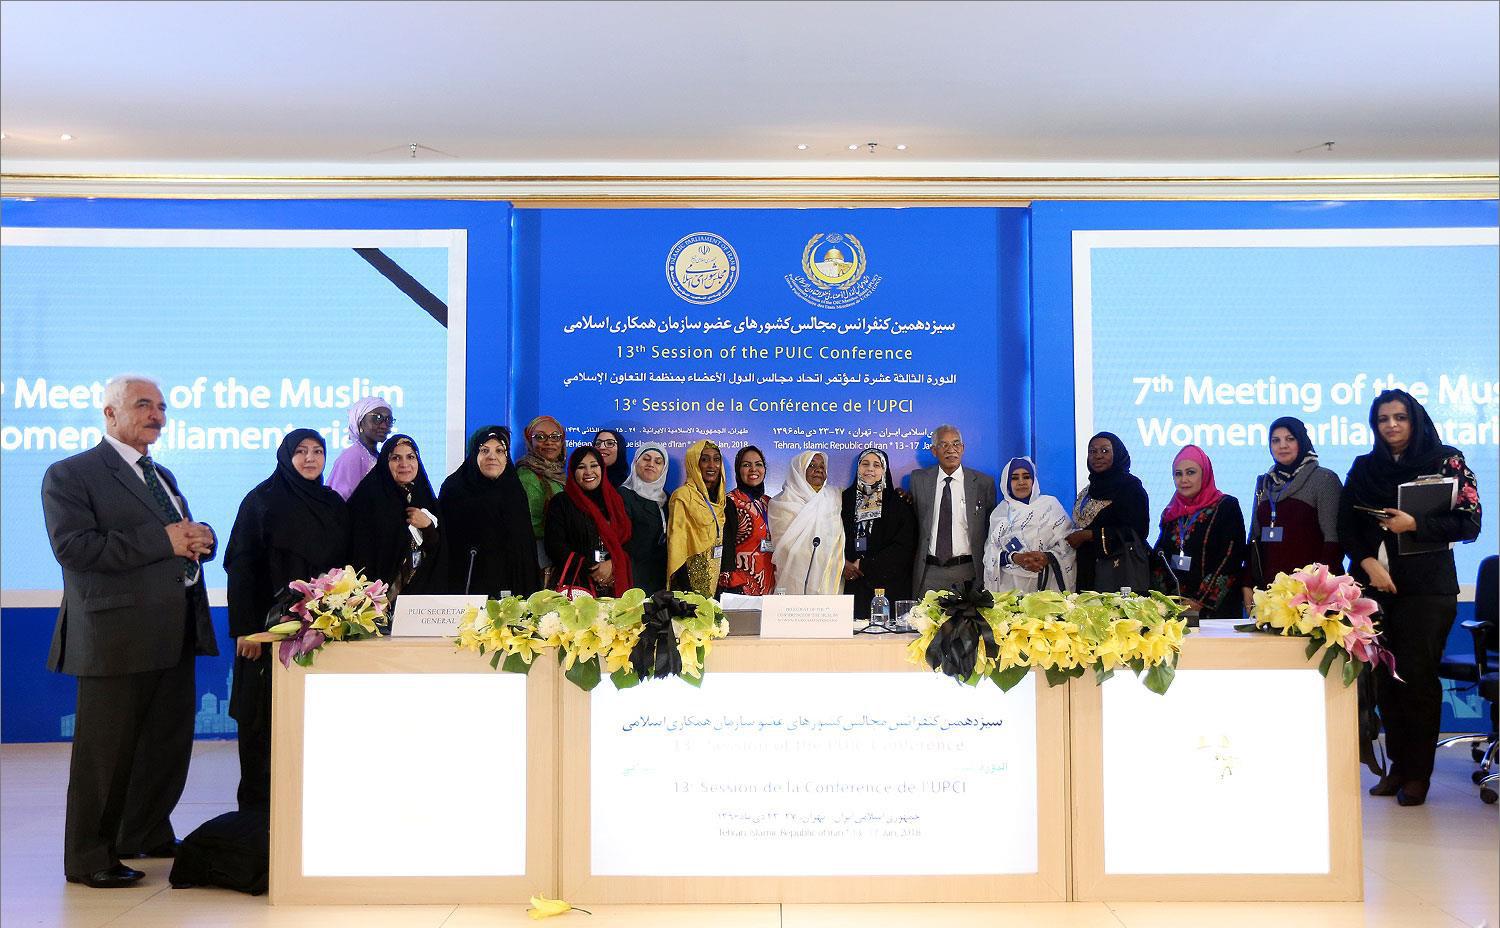 7th Meeting of the Muslim Women Parliamentarians, 15 January 2018